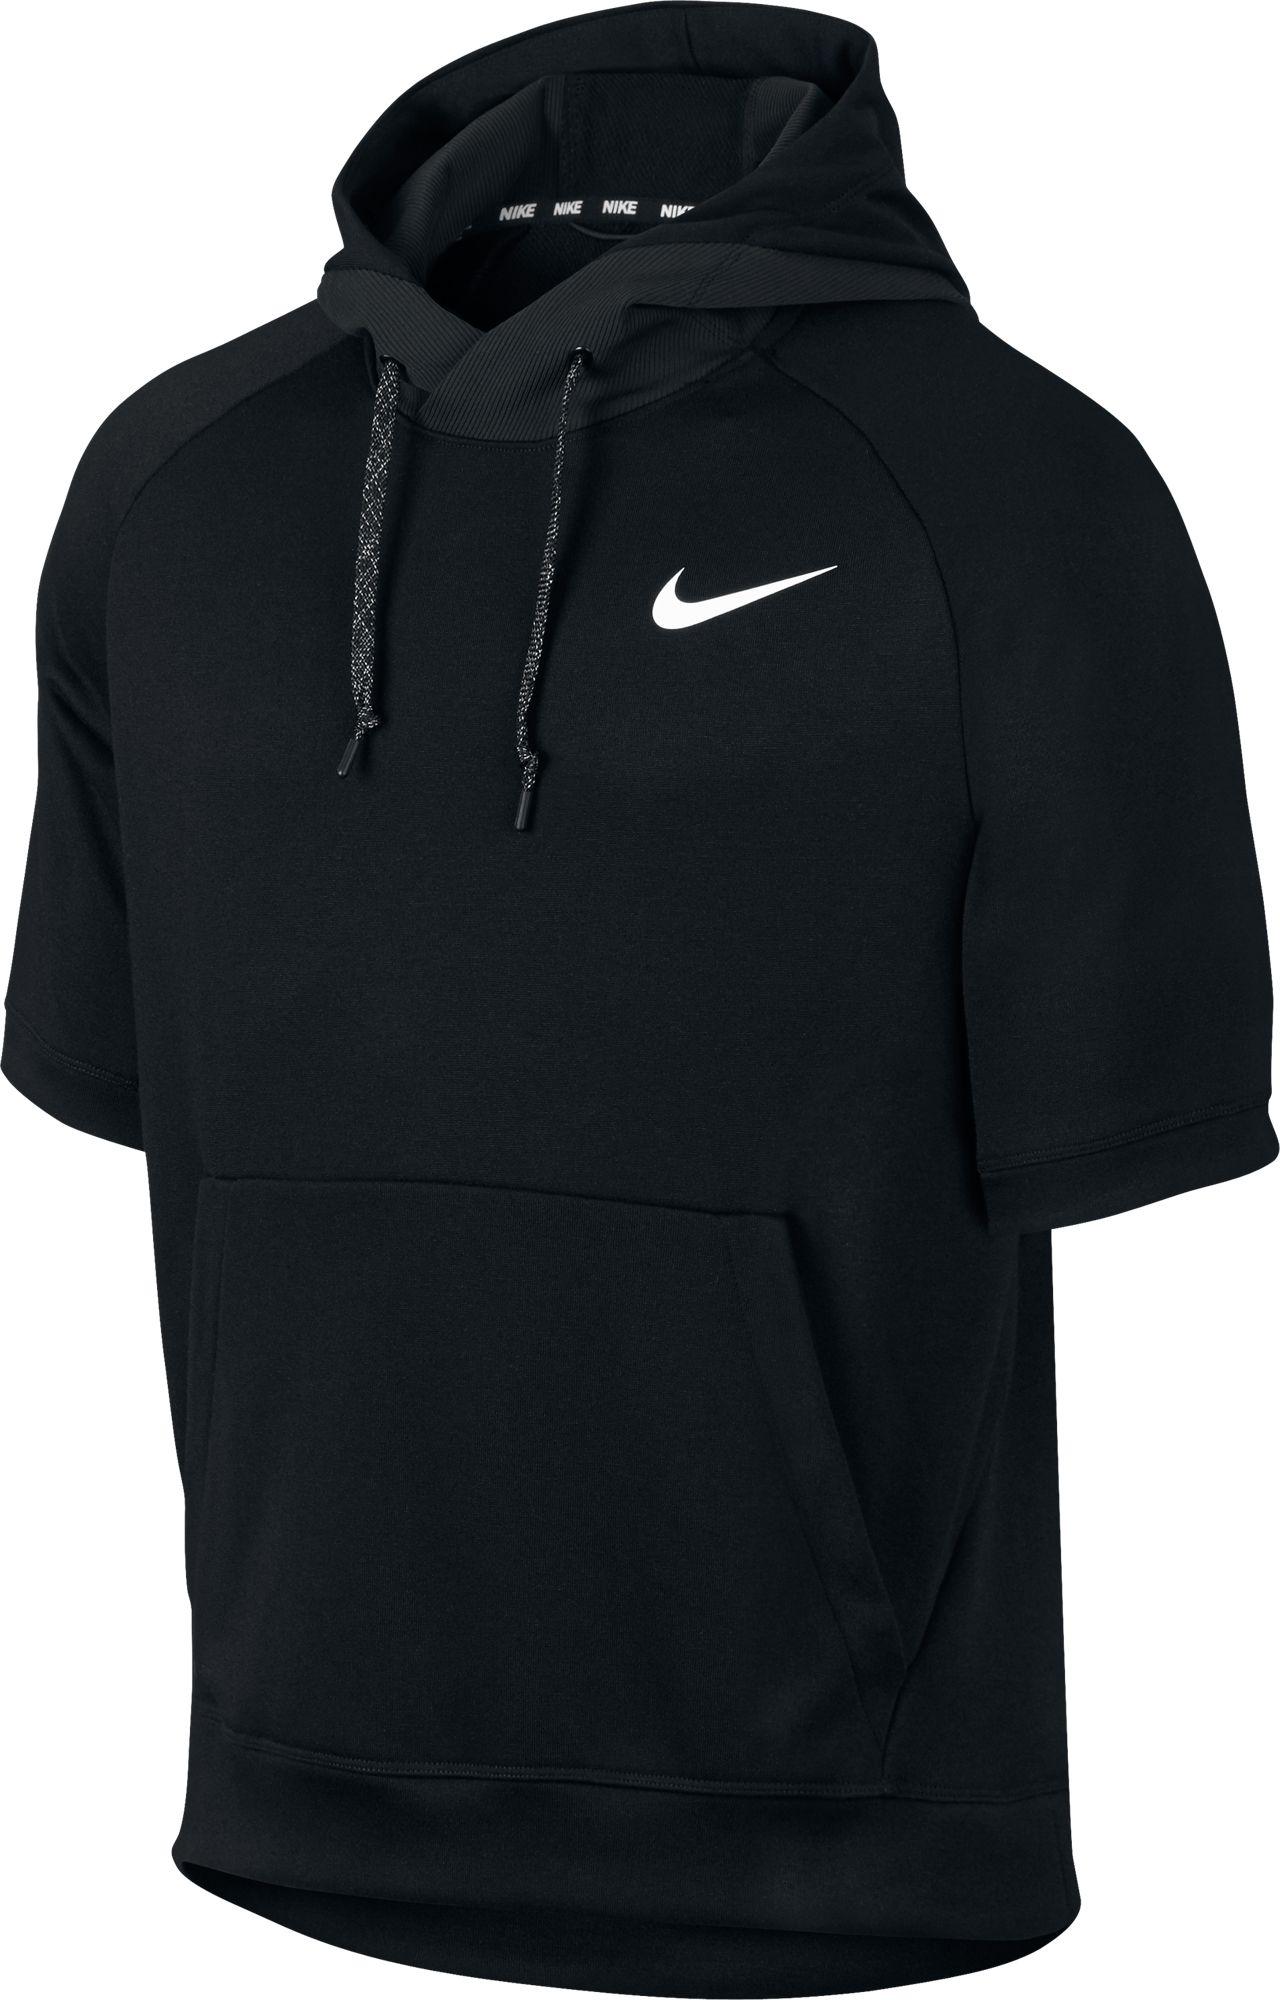 Nike Fleece Dri-fit Short Sleeve Hoodie in Black for Men - Lyst